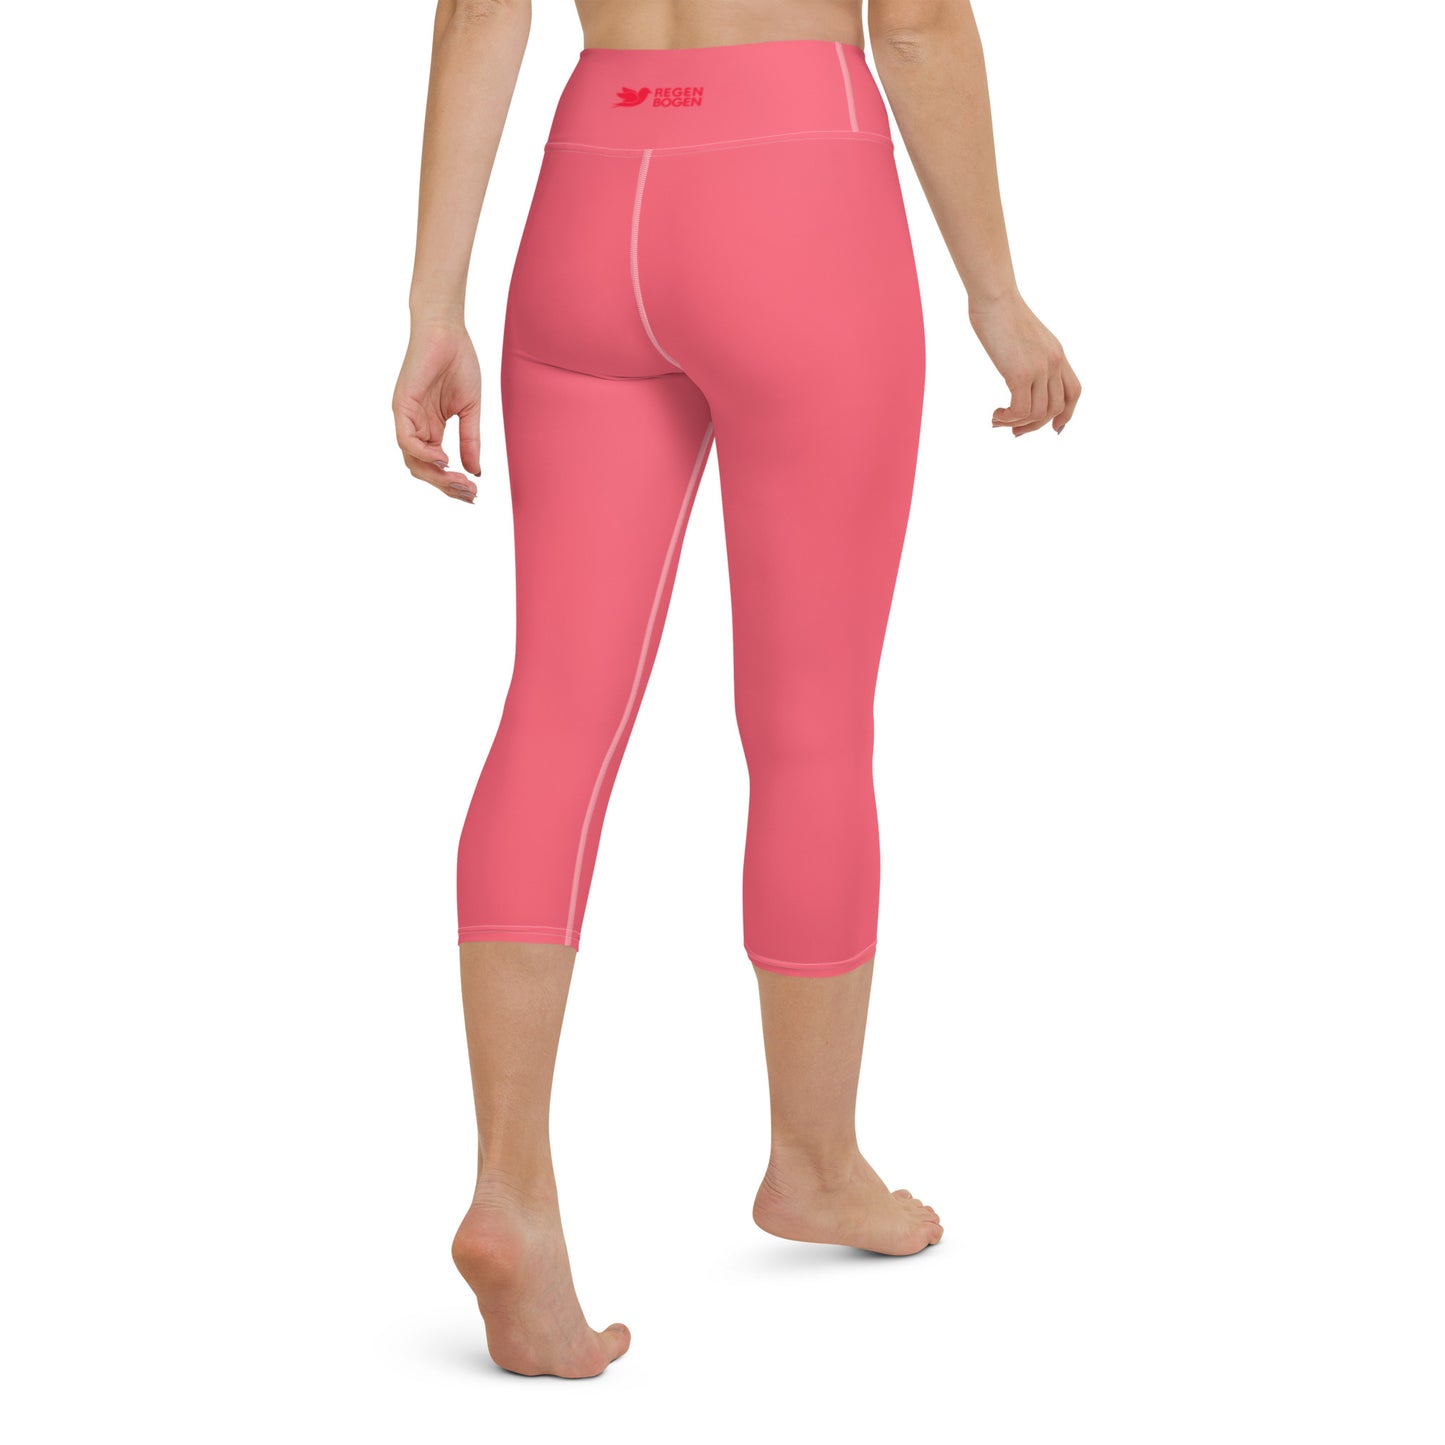 Cueva Solid Color Capri High Waist Yoga Leggings / Pants with Inside Pocket